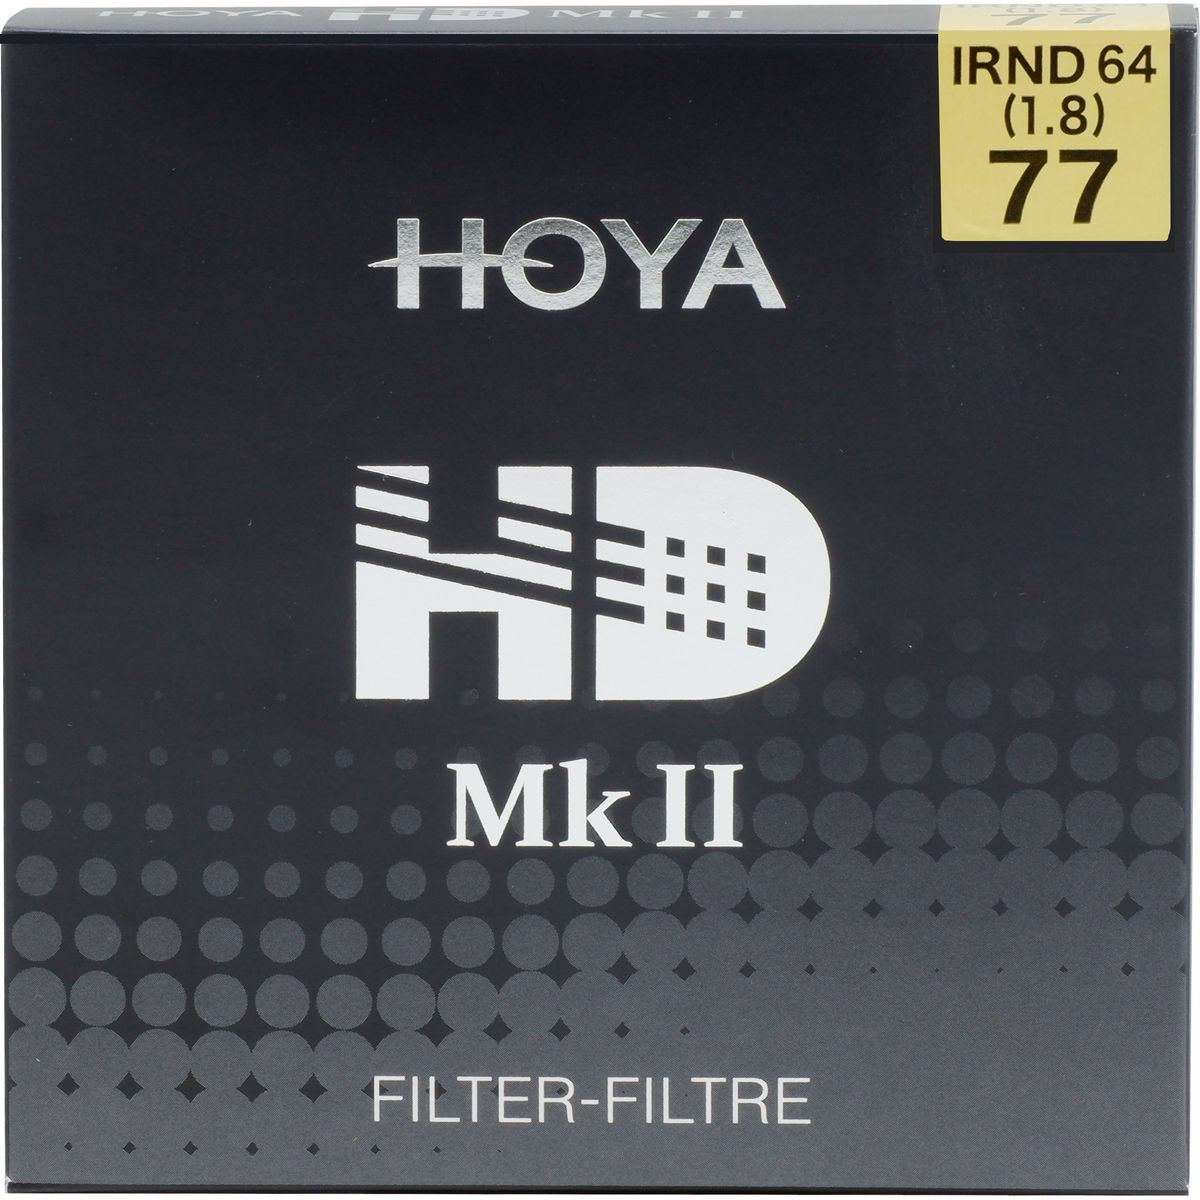 Hoya 77.0mm HD MkII IRND64 (1.8)